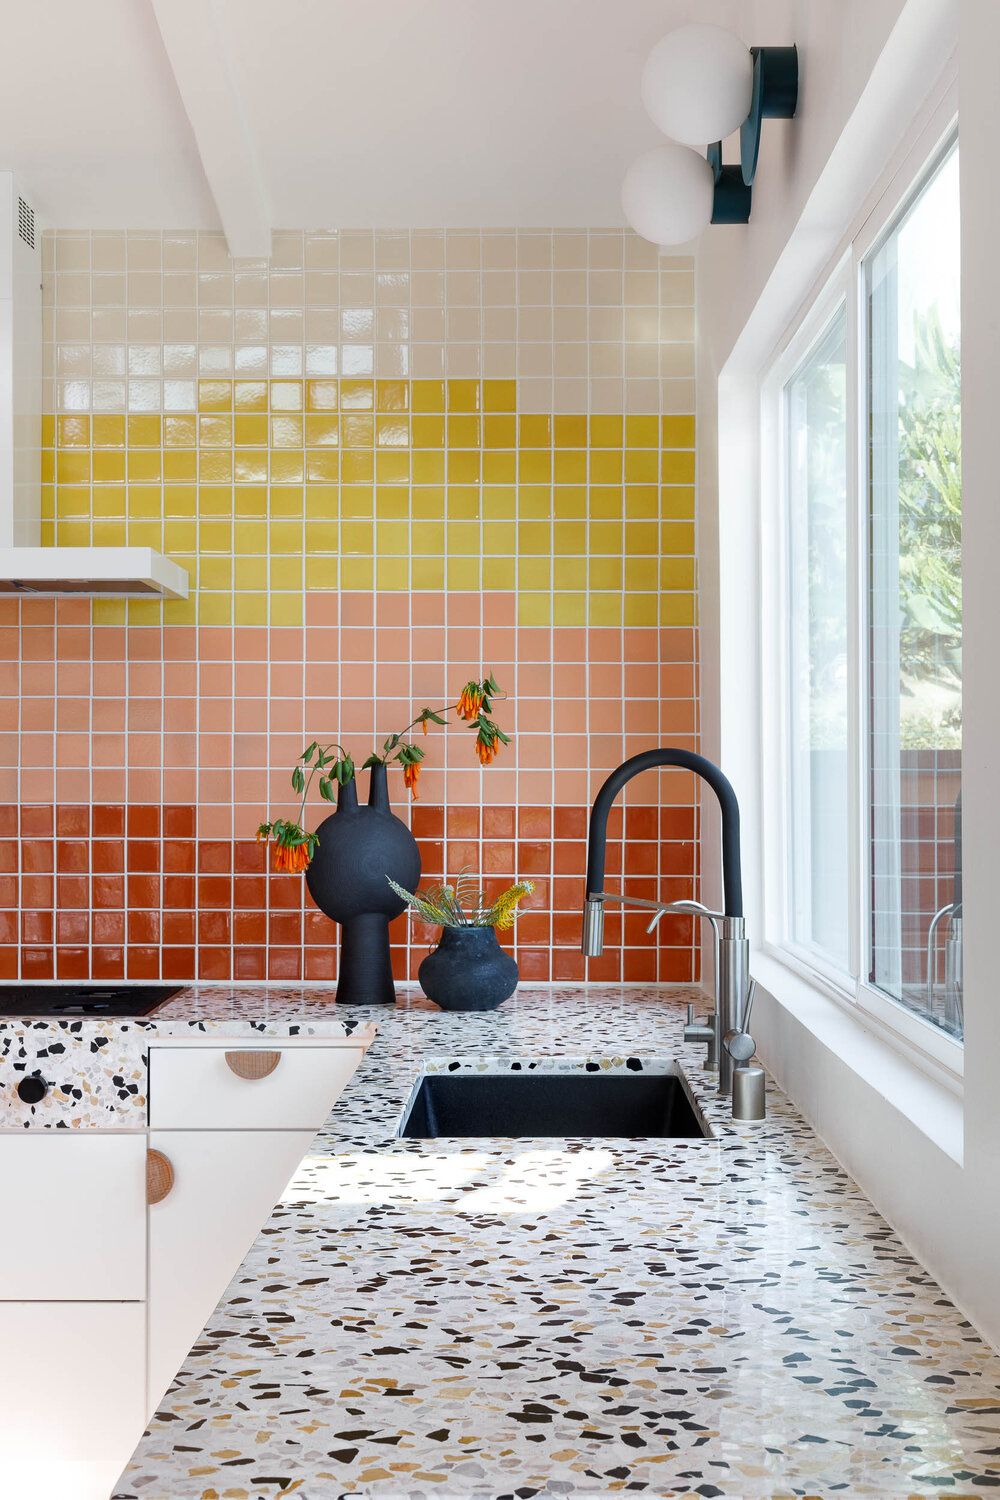 70s style kitchen backsplash tile via Aker Interiors